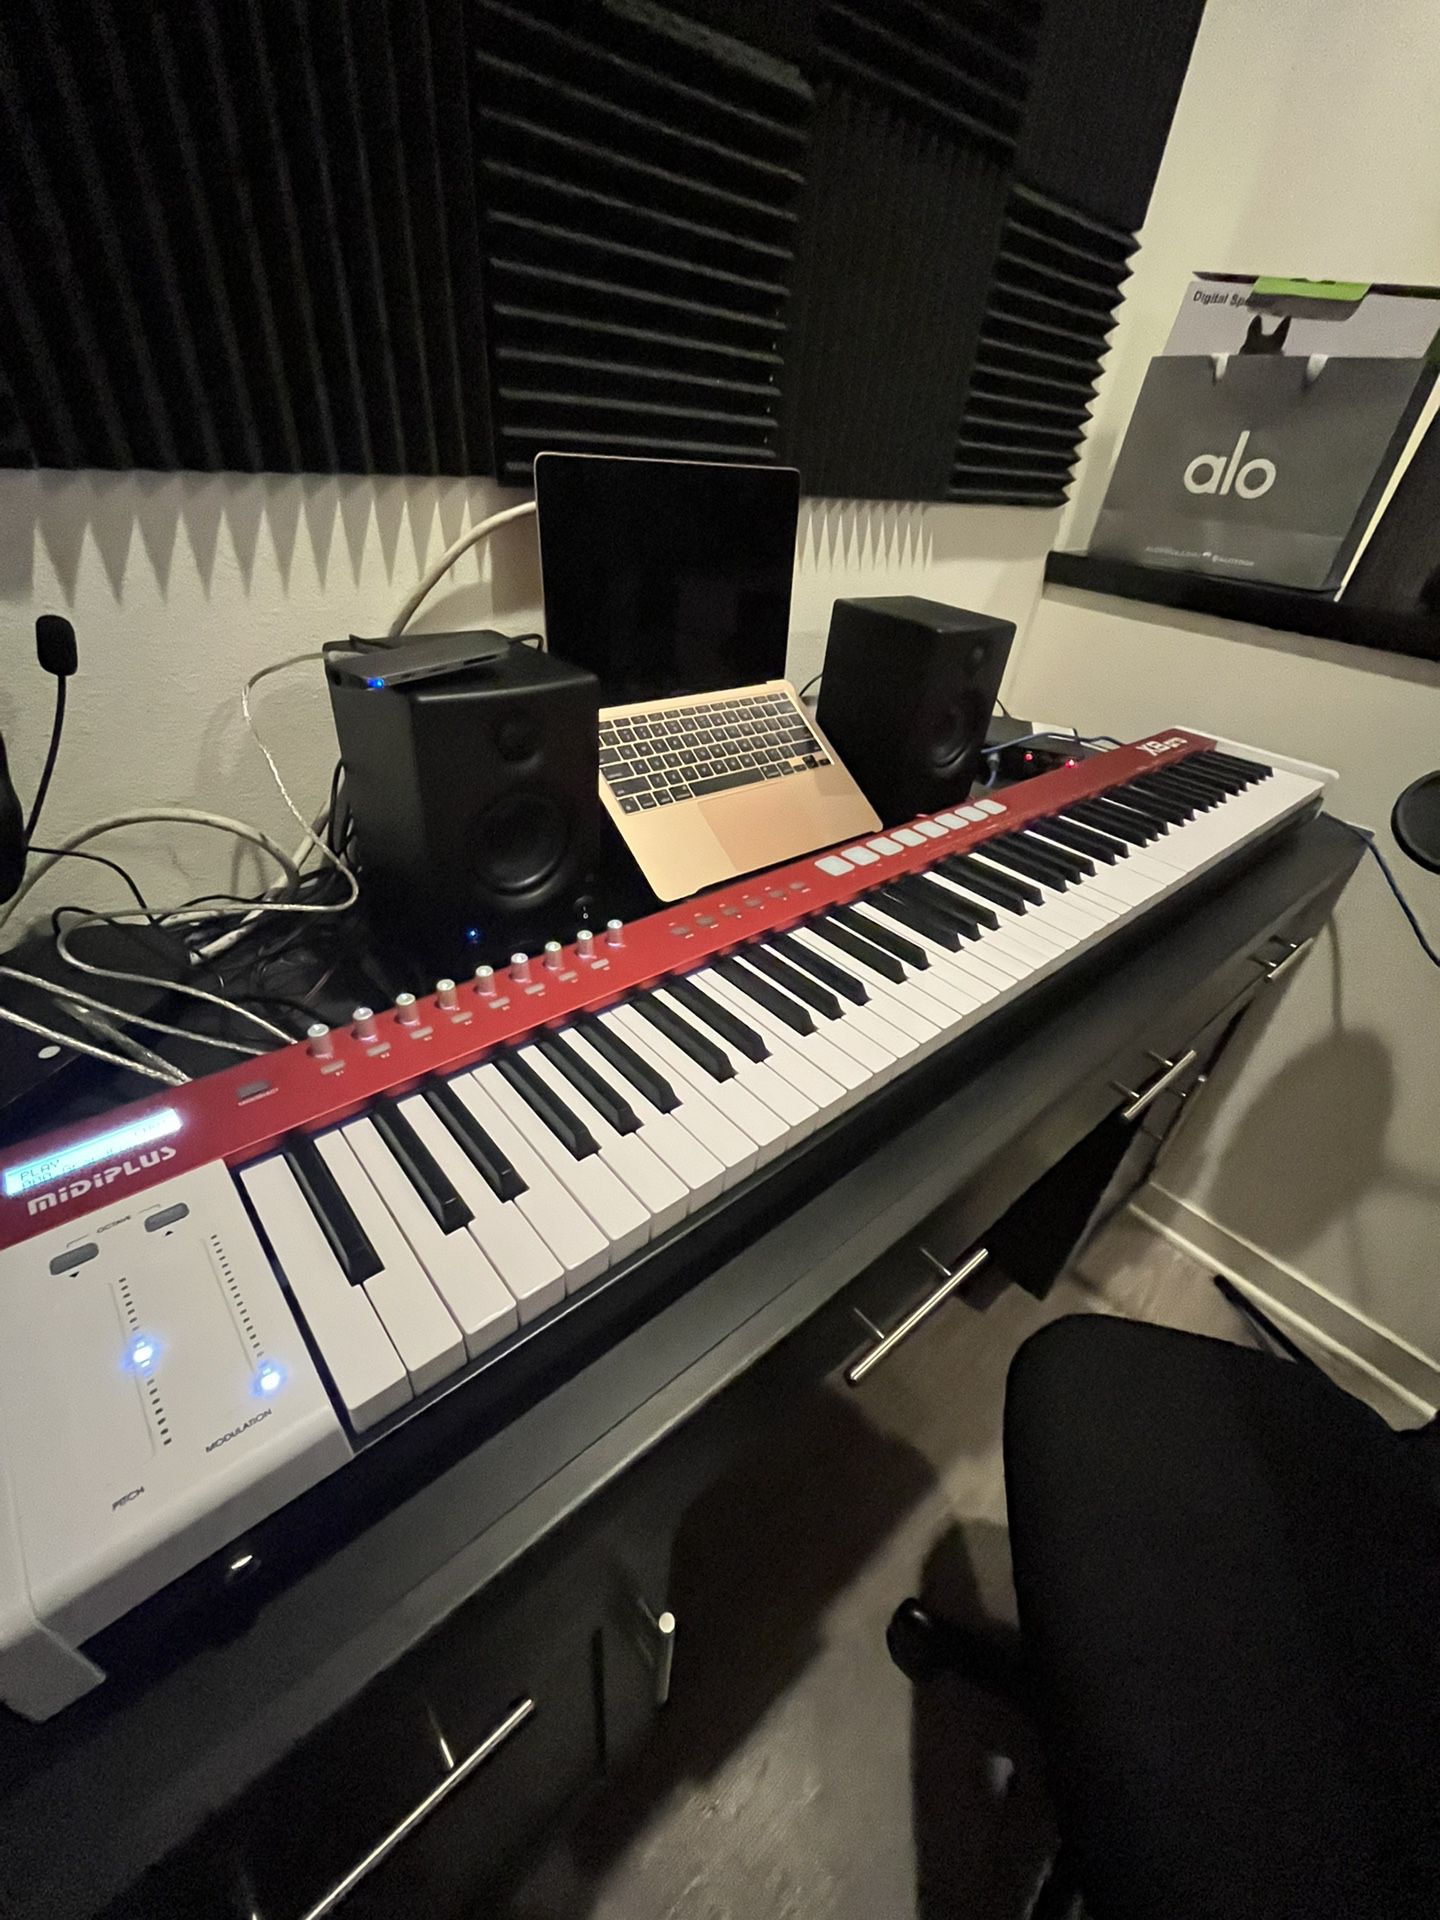 MIDIplus X8 Pro Keyboard 